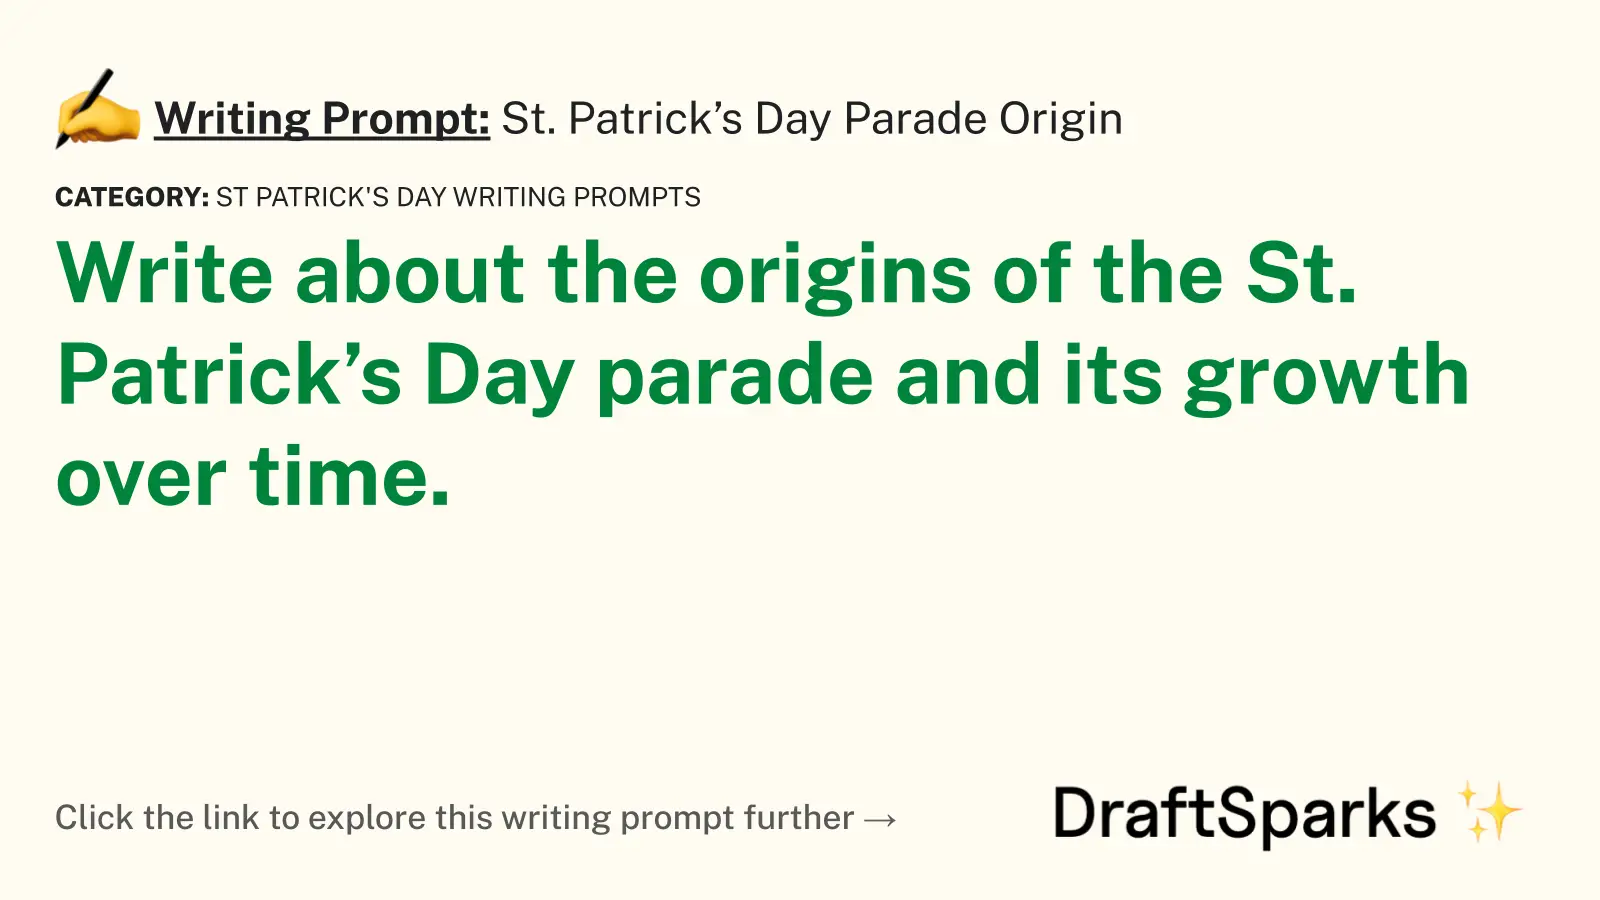 St. Patrick’s Day Parade Origin